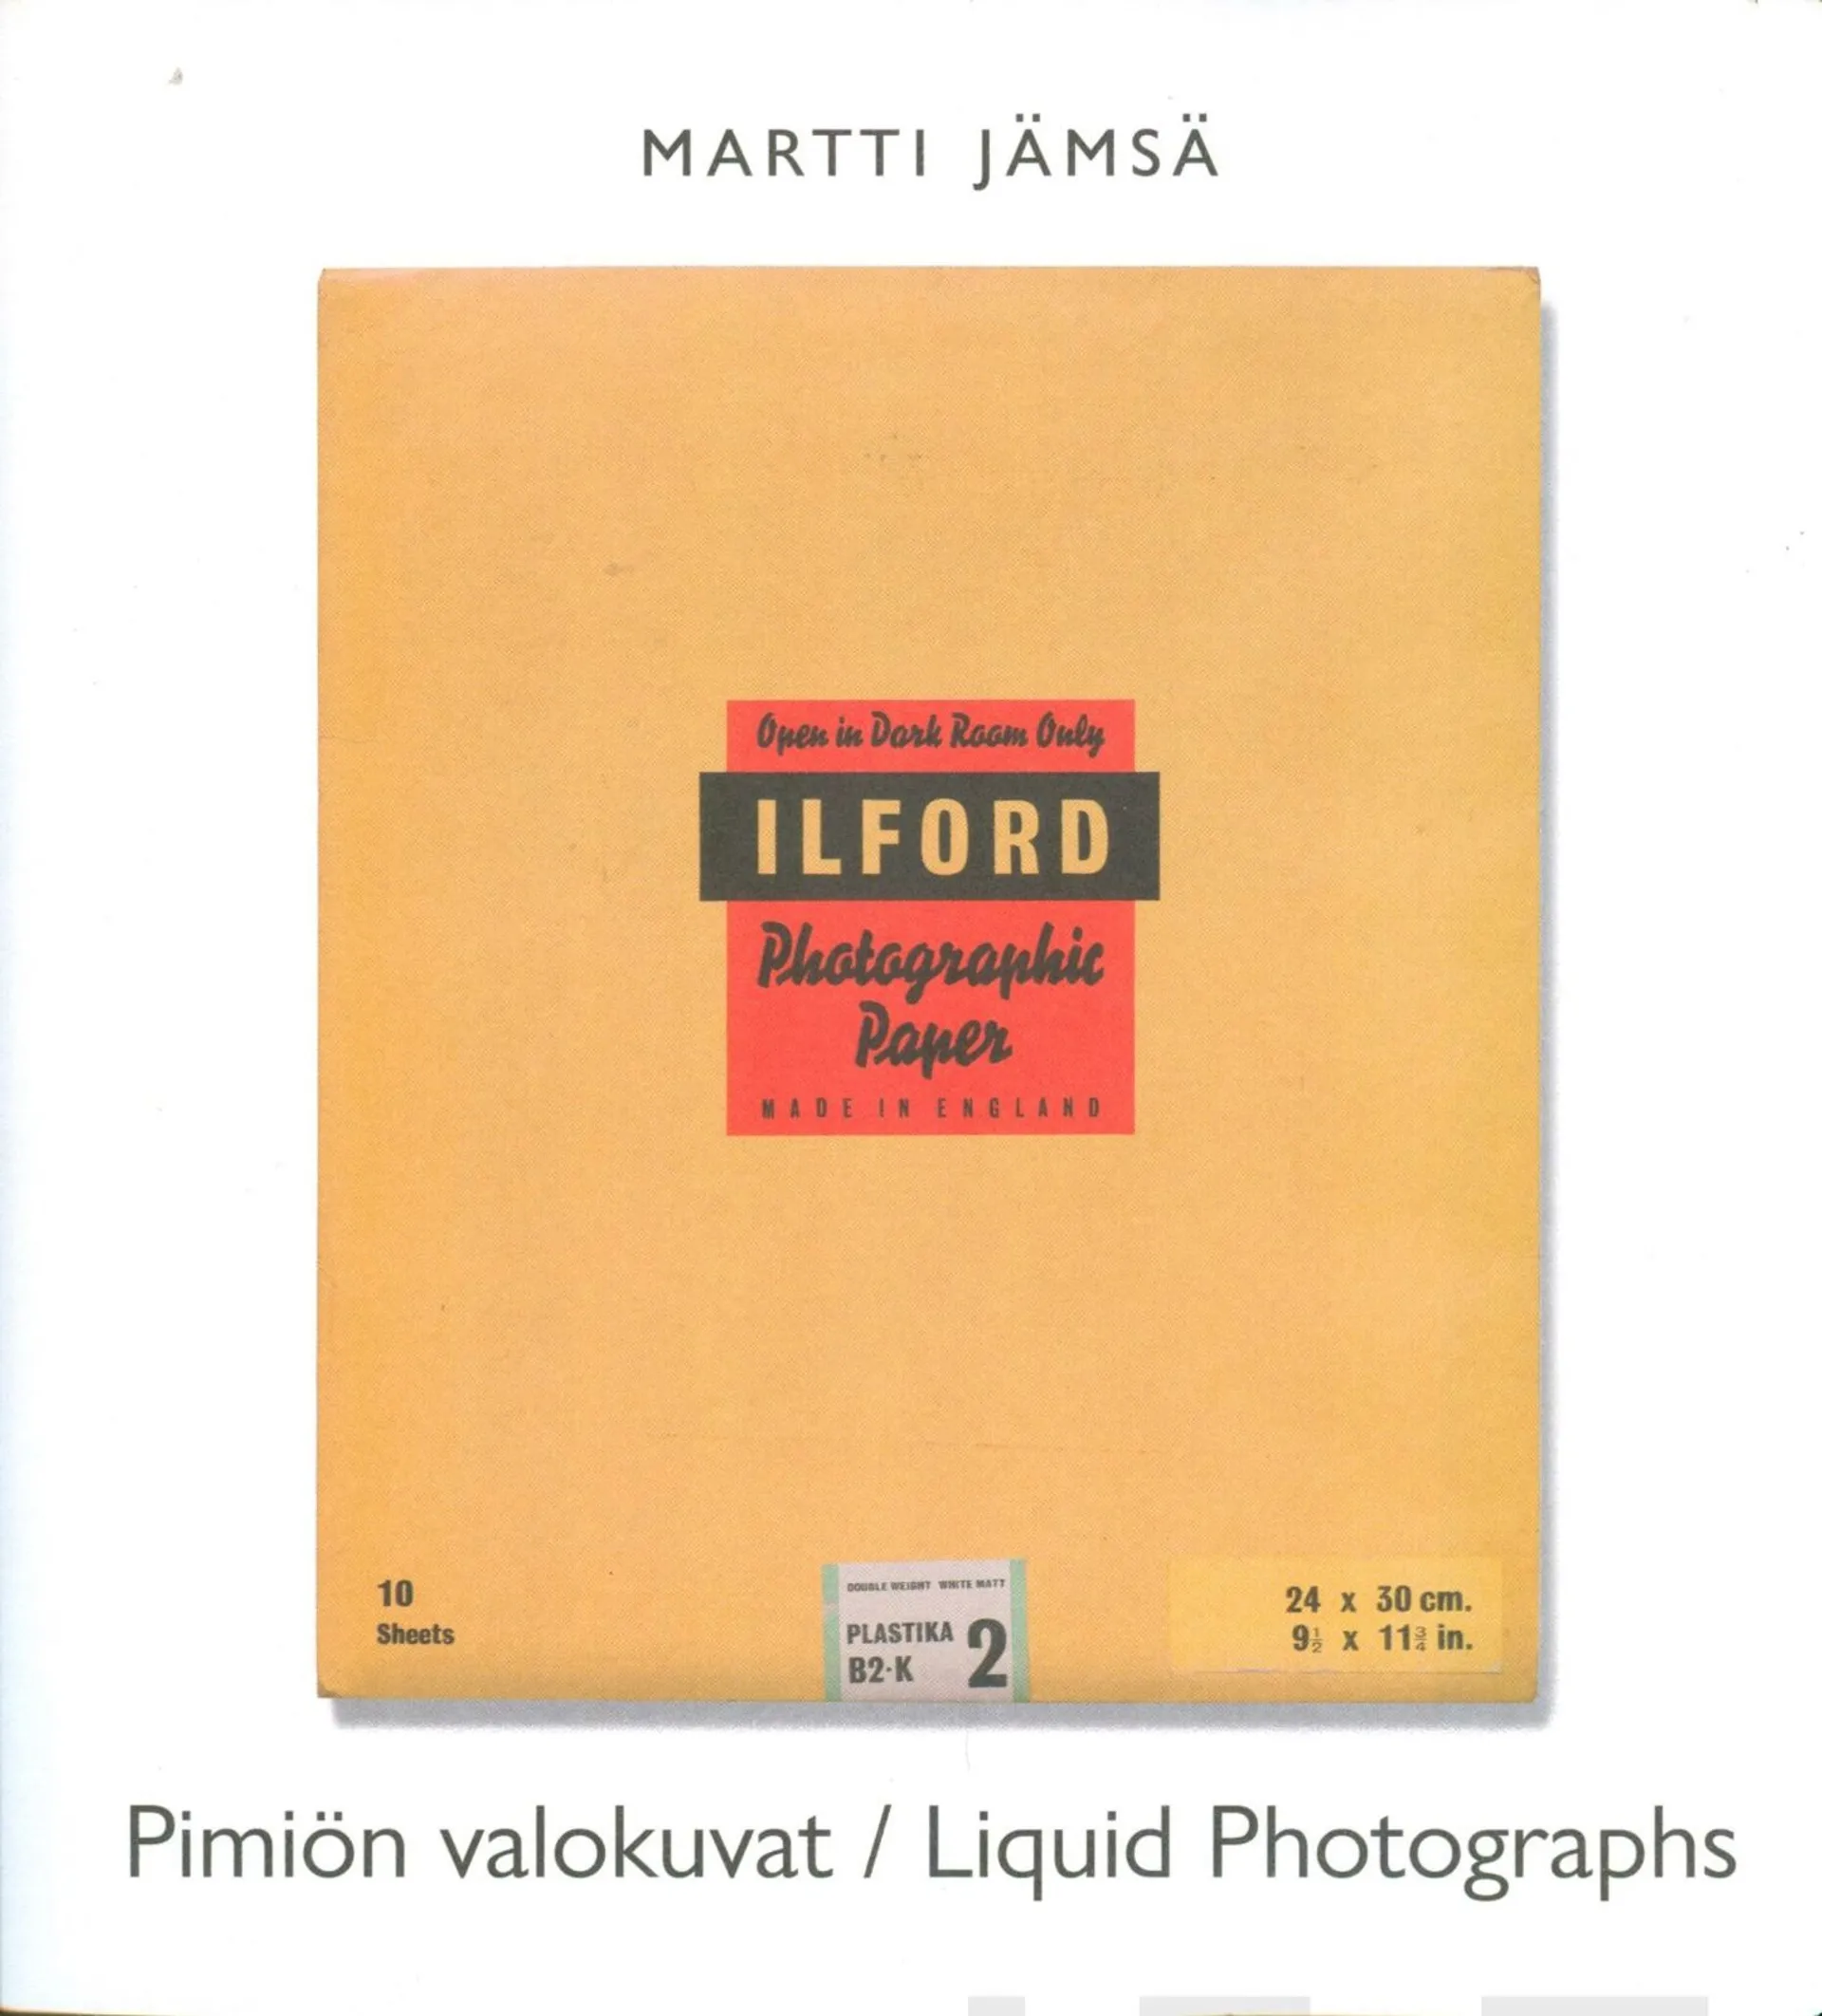 Pimiön valokuvat / Liquid Photographs